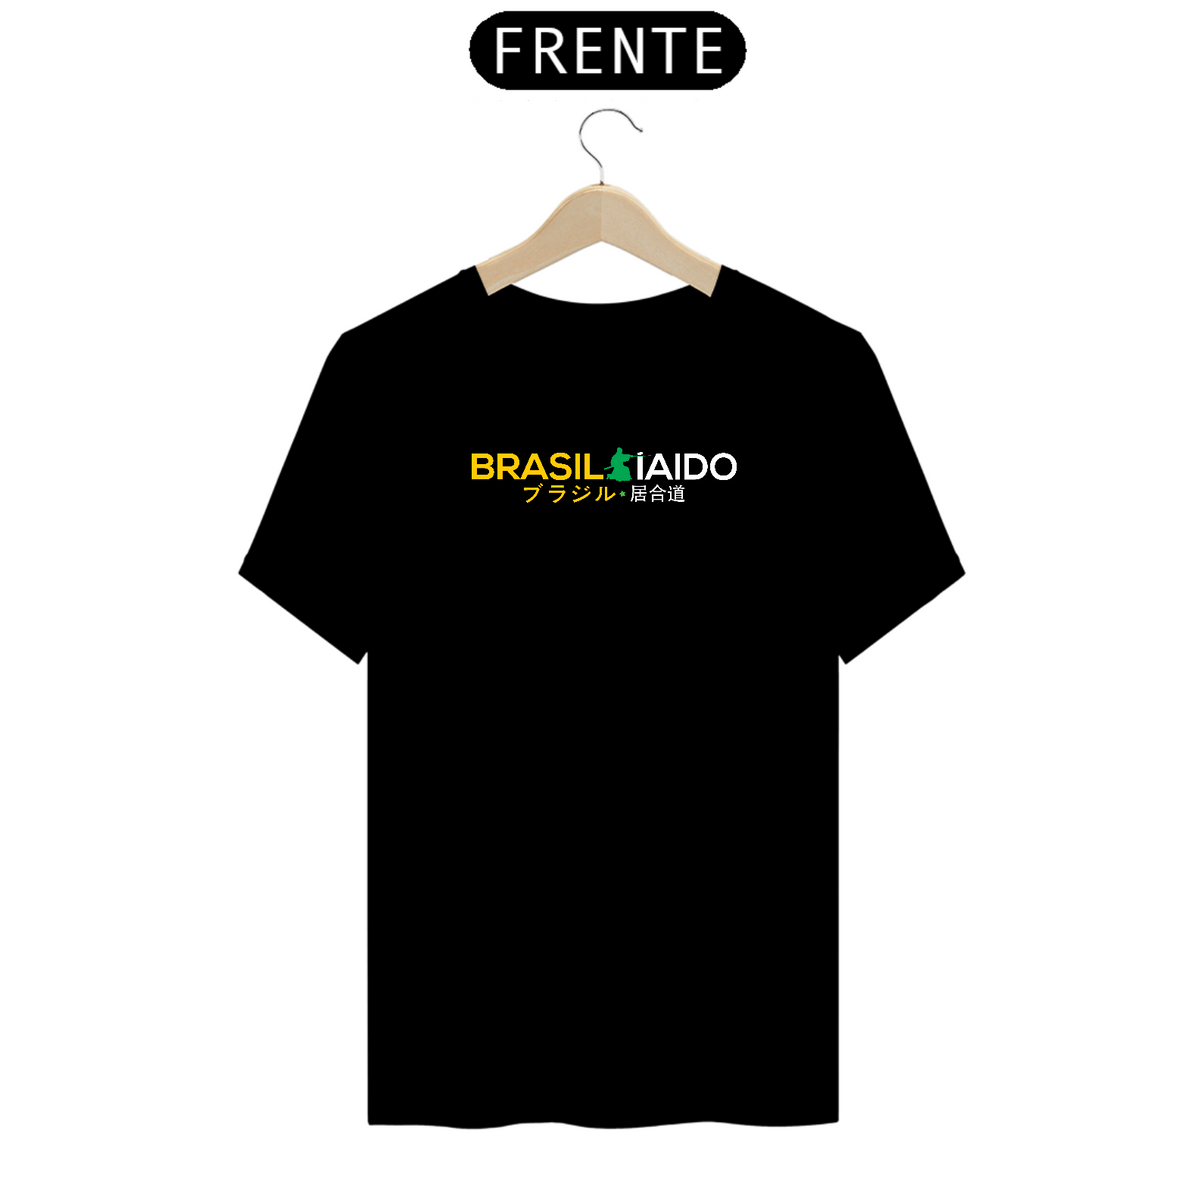 Nome do produto: Iaido Brasil